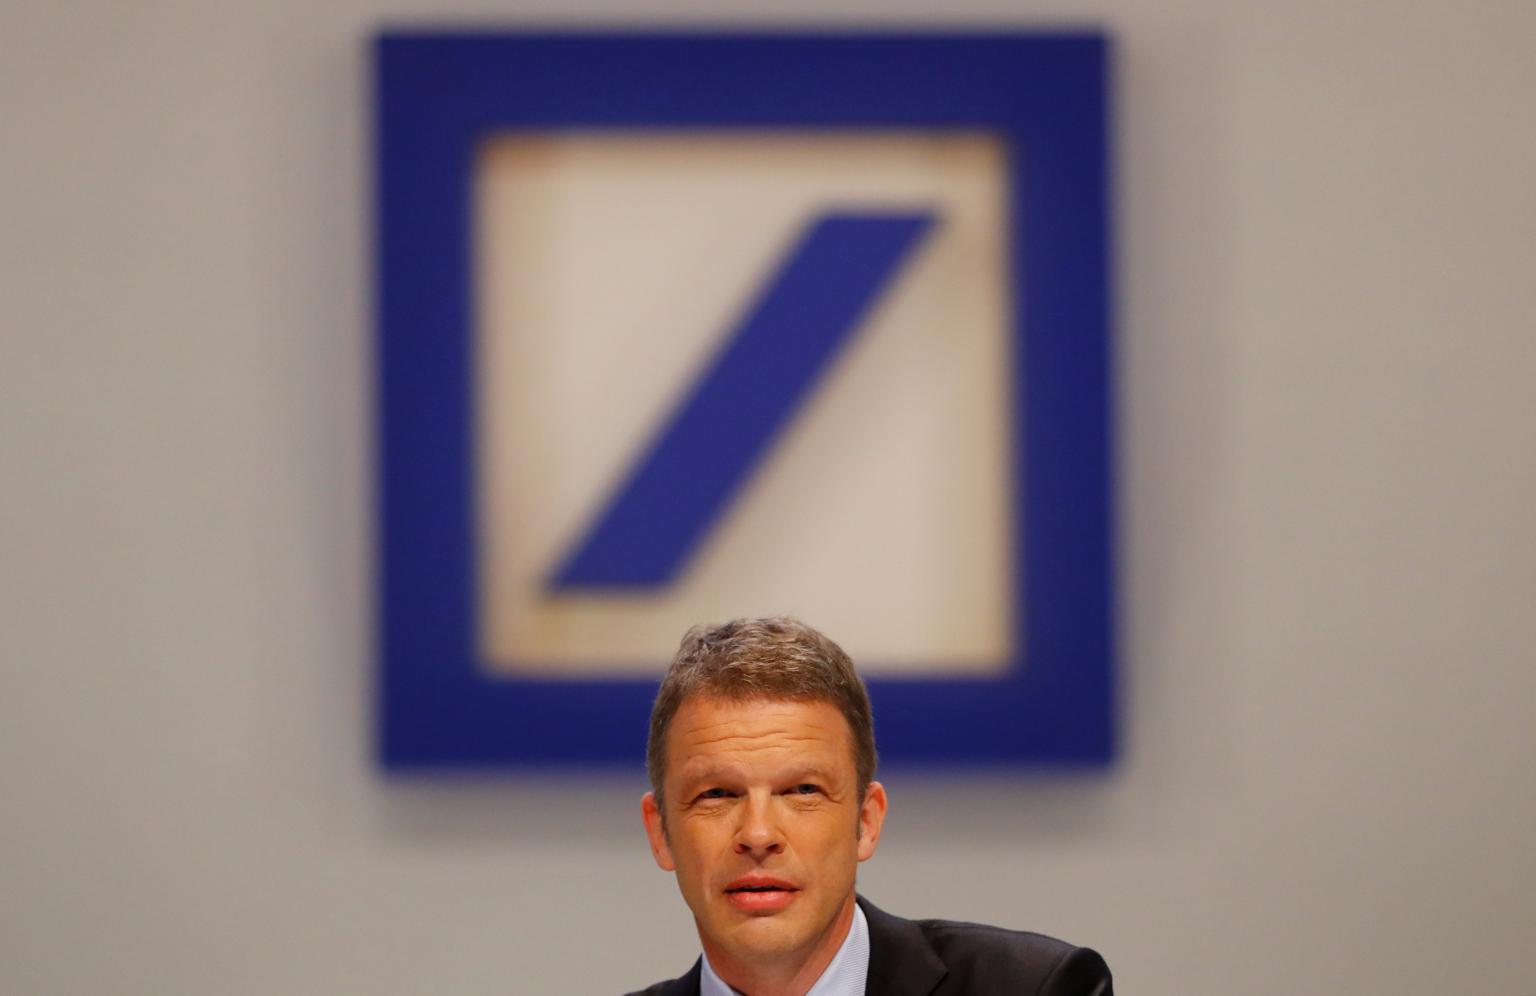 Deutsche Bank axes at least 7,000 jobs in trading retreat